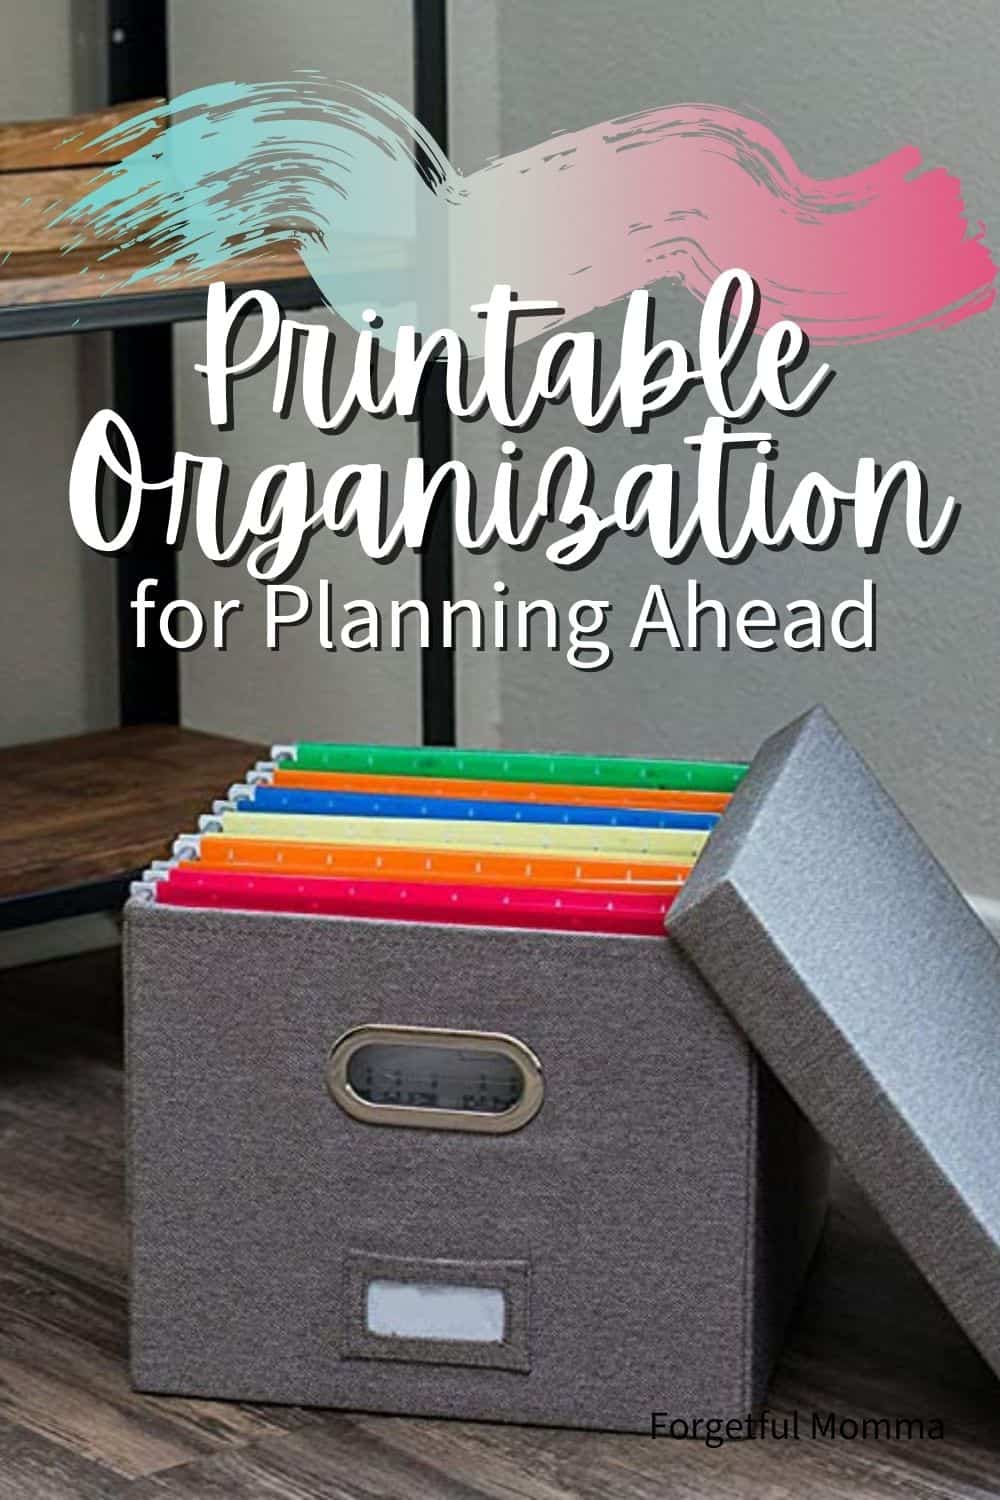 Printable Organization for Planning Ahead